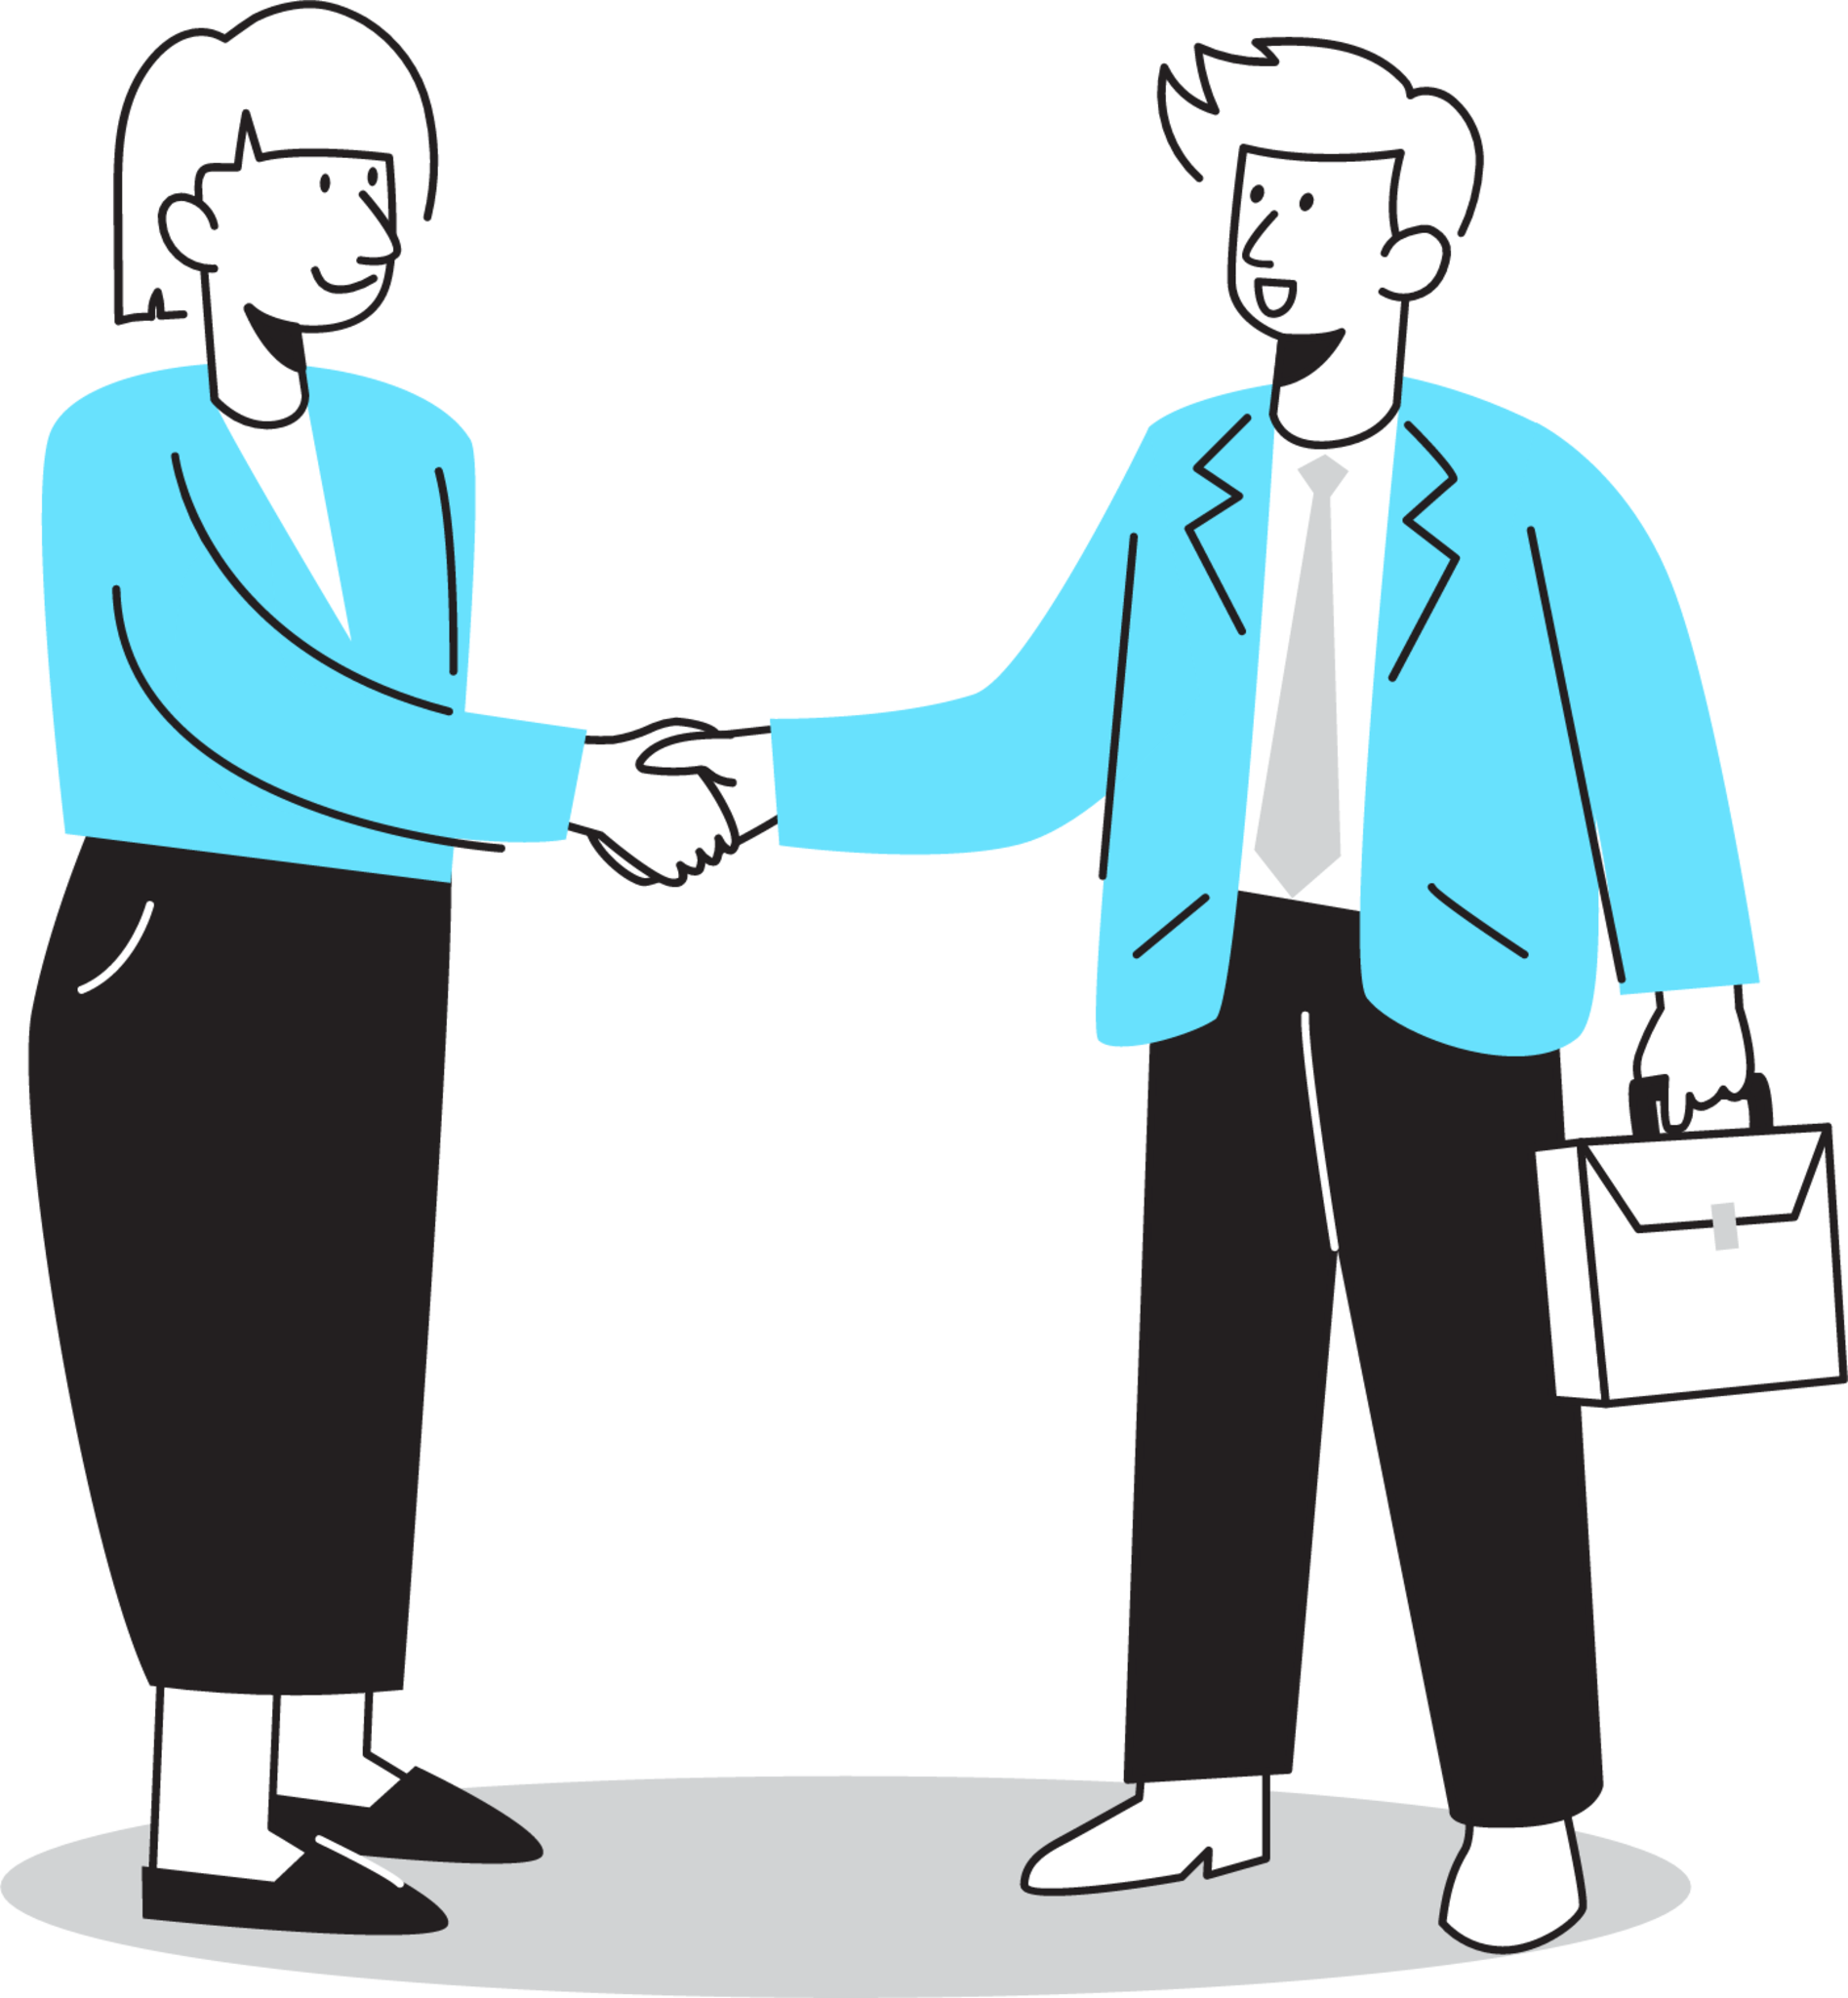 Handshake illustration